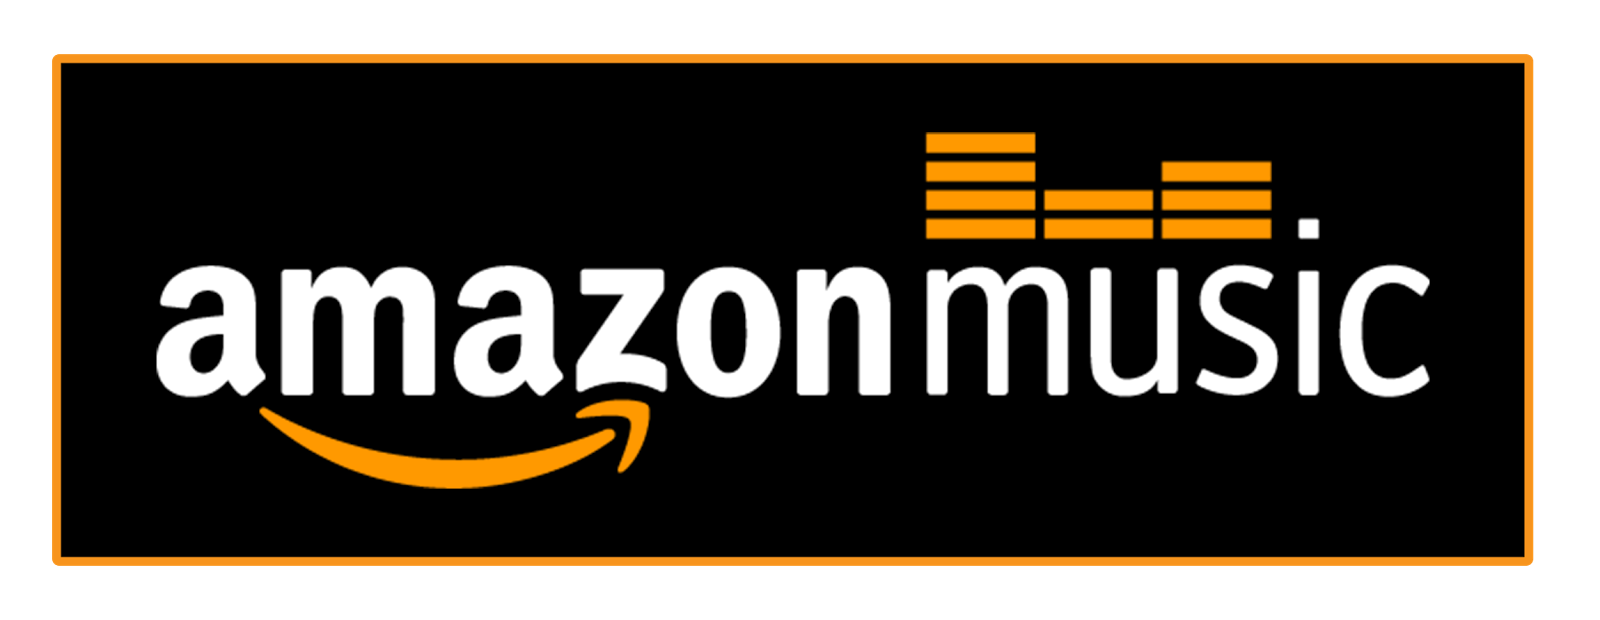 Amazon Music Logo - Amazon Music Logo Transparent & PNG Clipart Free Download